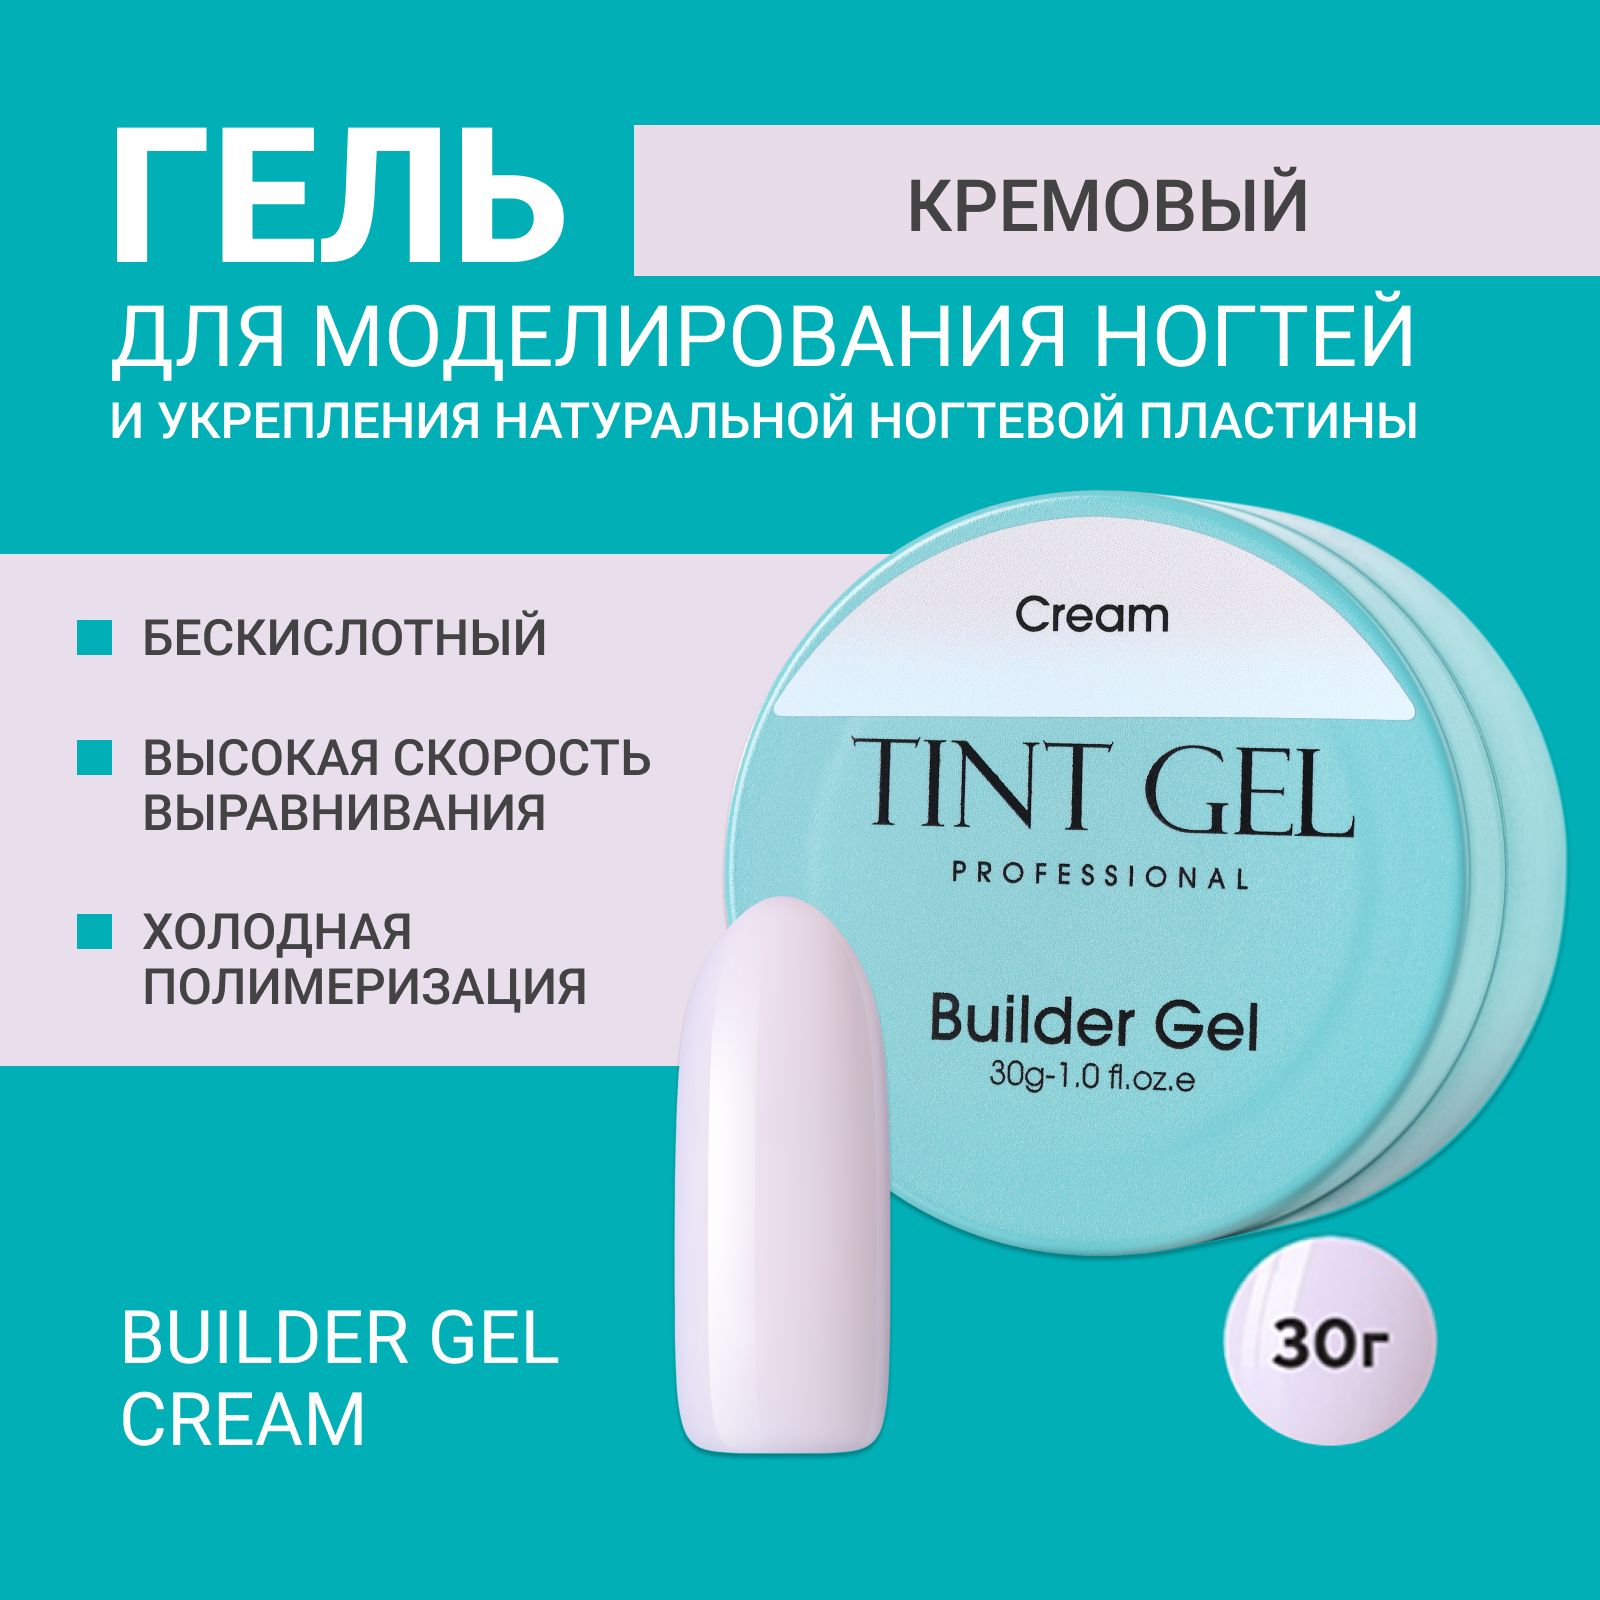 Гель Tint Gel Professional Builder gel Cream 30 г